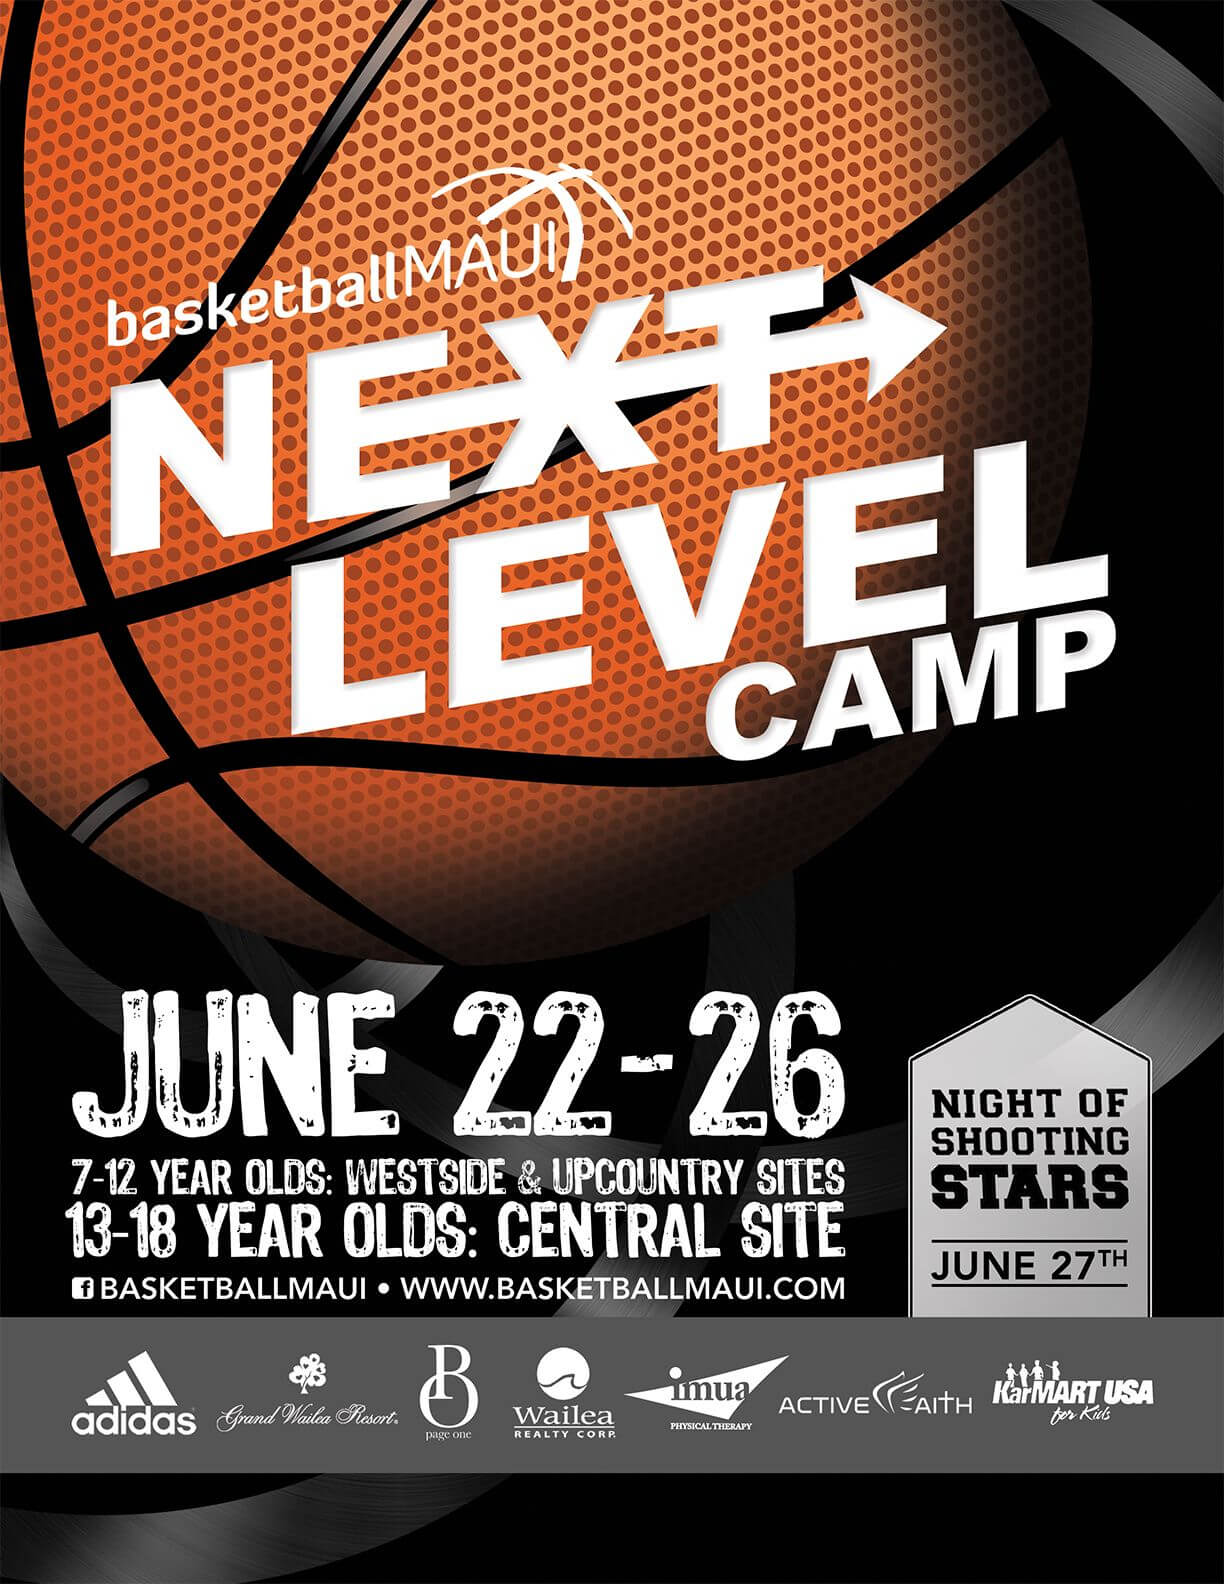 Flyer Design For Kids Basketball Camp. Designed Regarding Basketball Camp Brochure Template